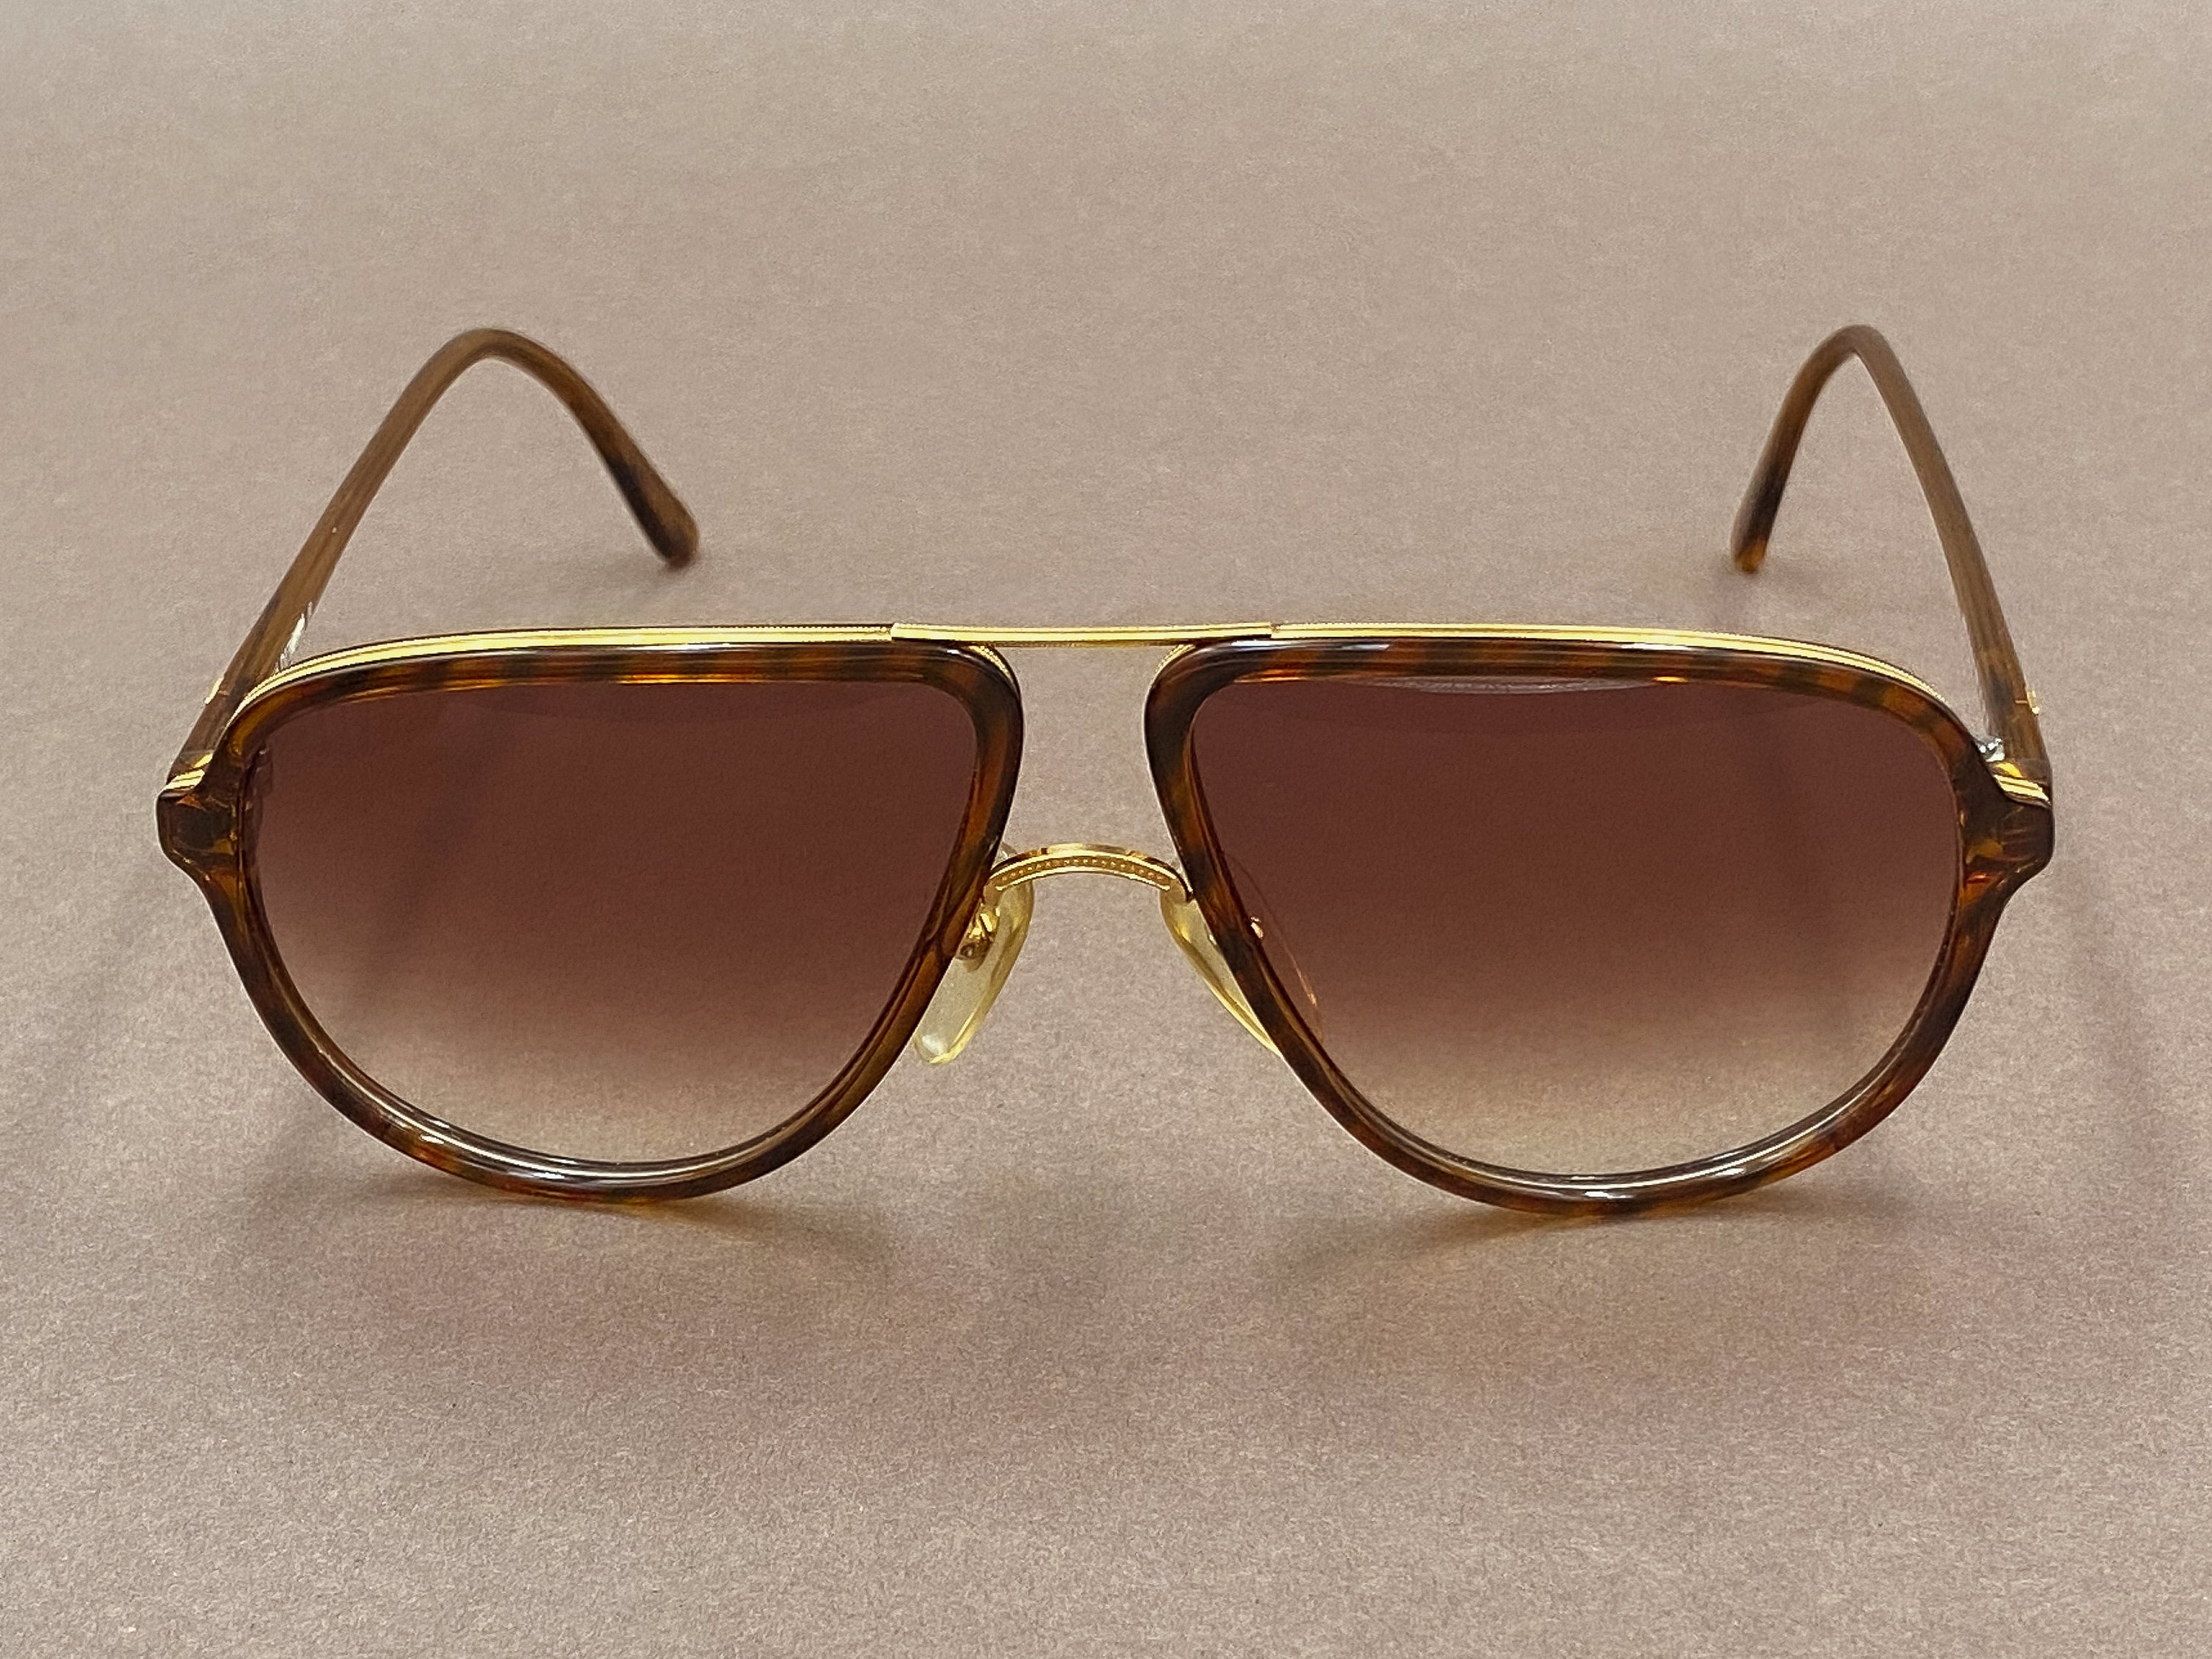 Dunhill 6058 gentlemans sunglasses